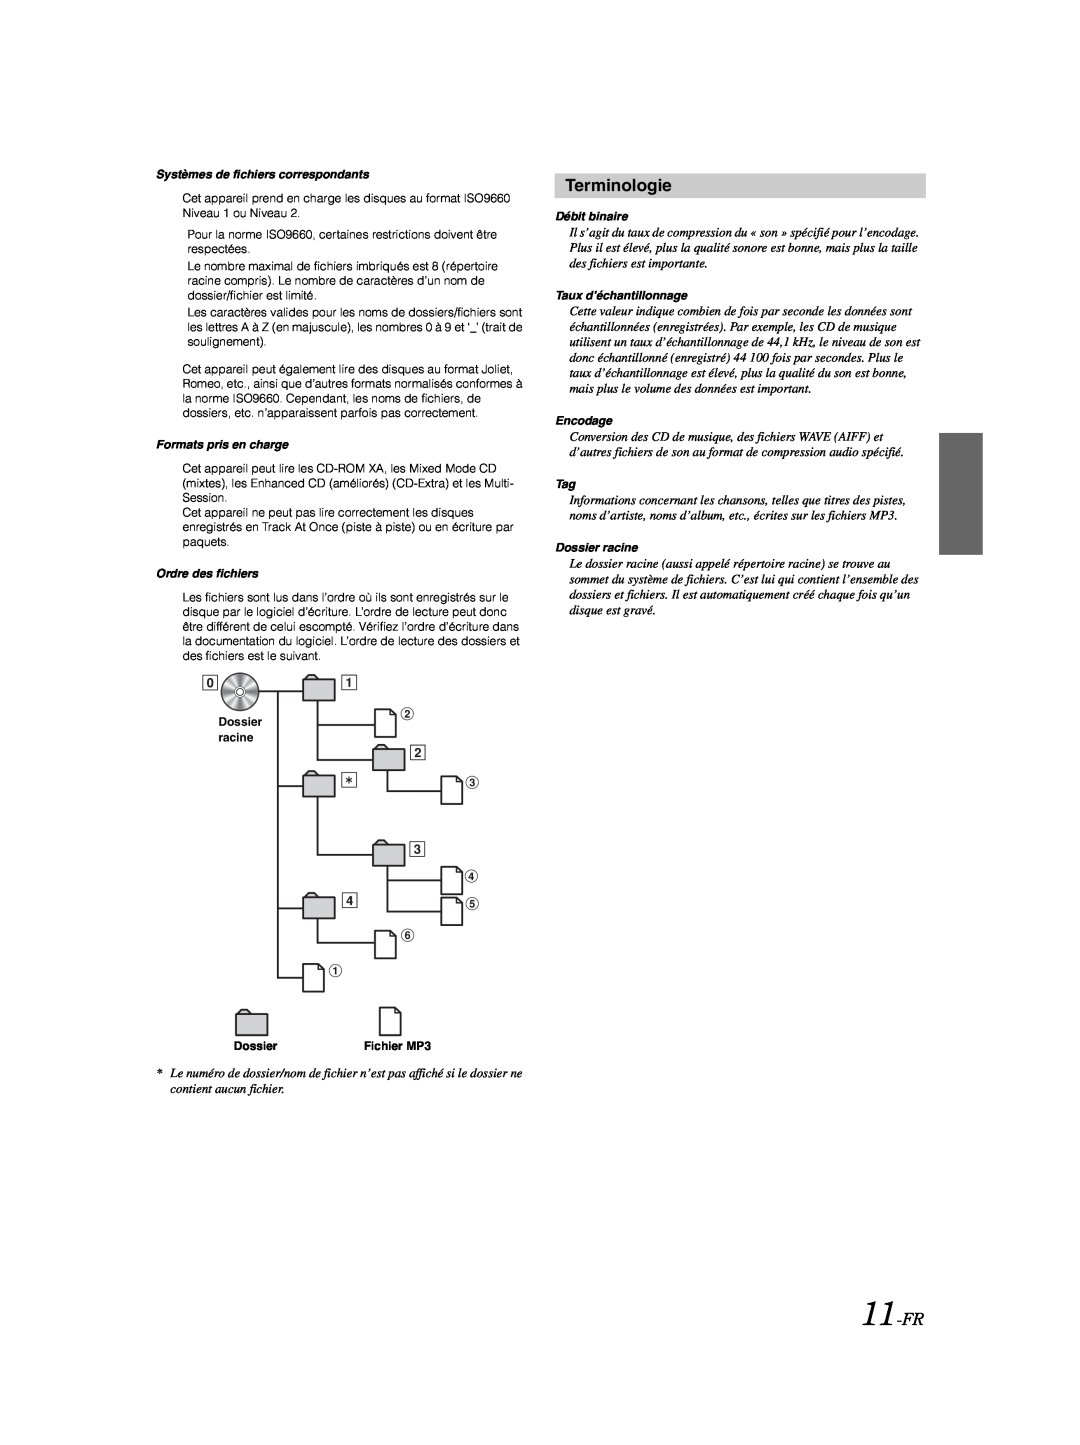 Alpine CDE-9870 owner manual Terminologie, 11-FR 